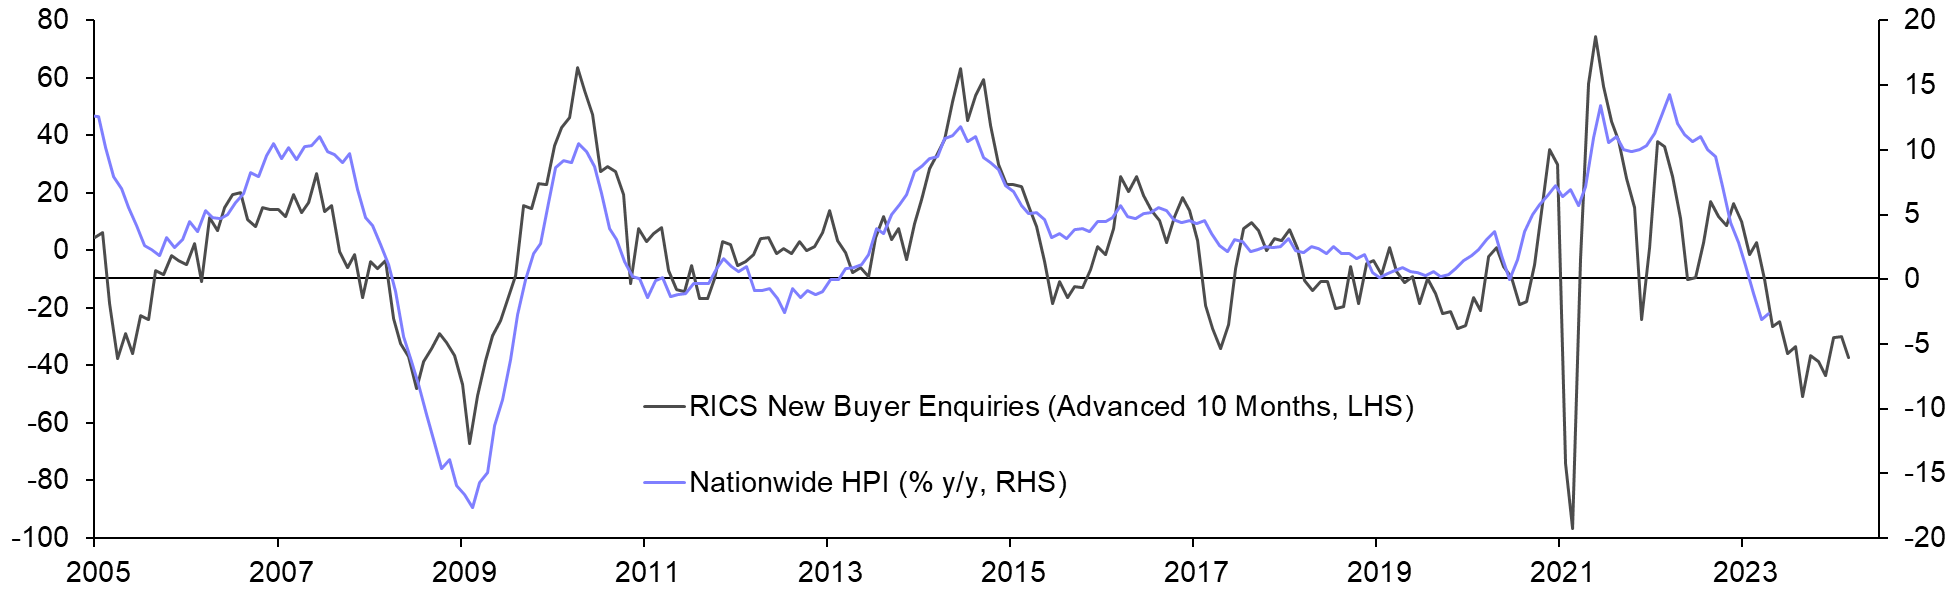 RICS Residential Market Survey (Apr.)
